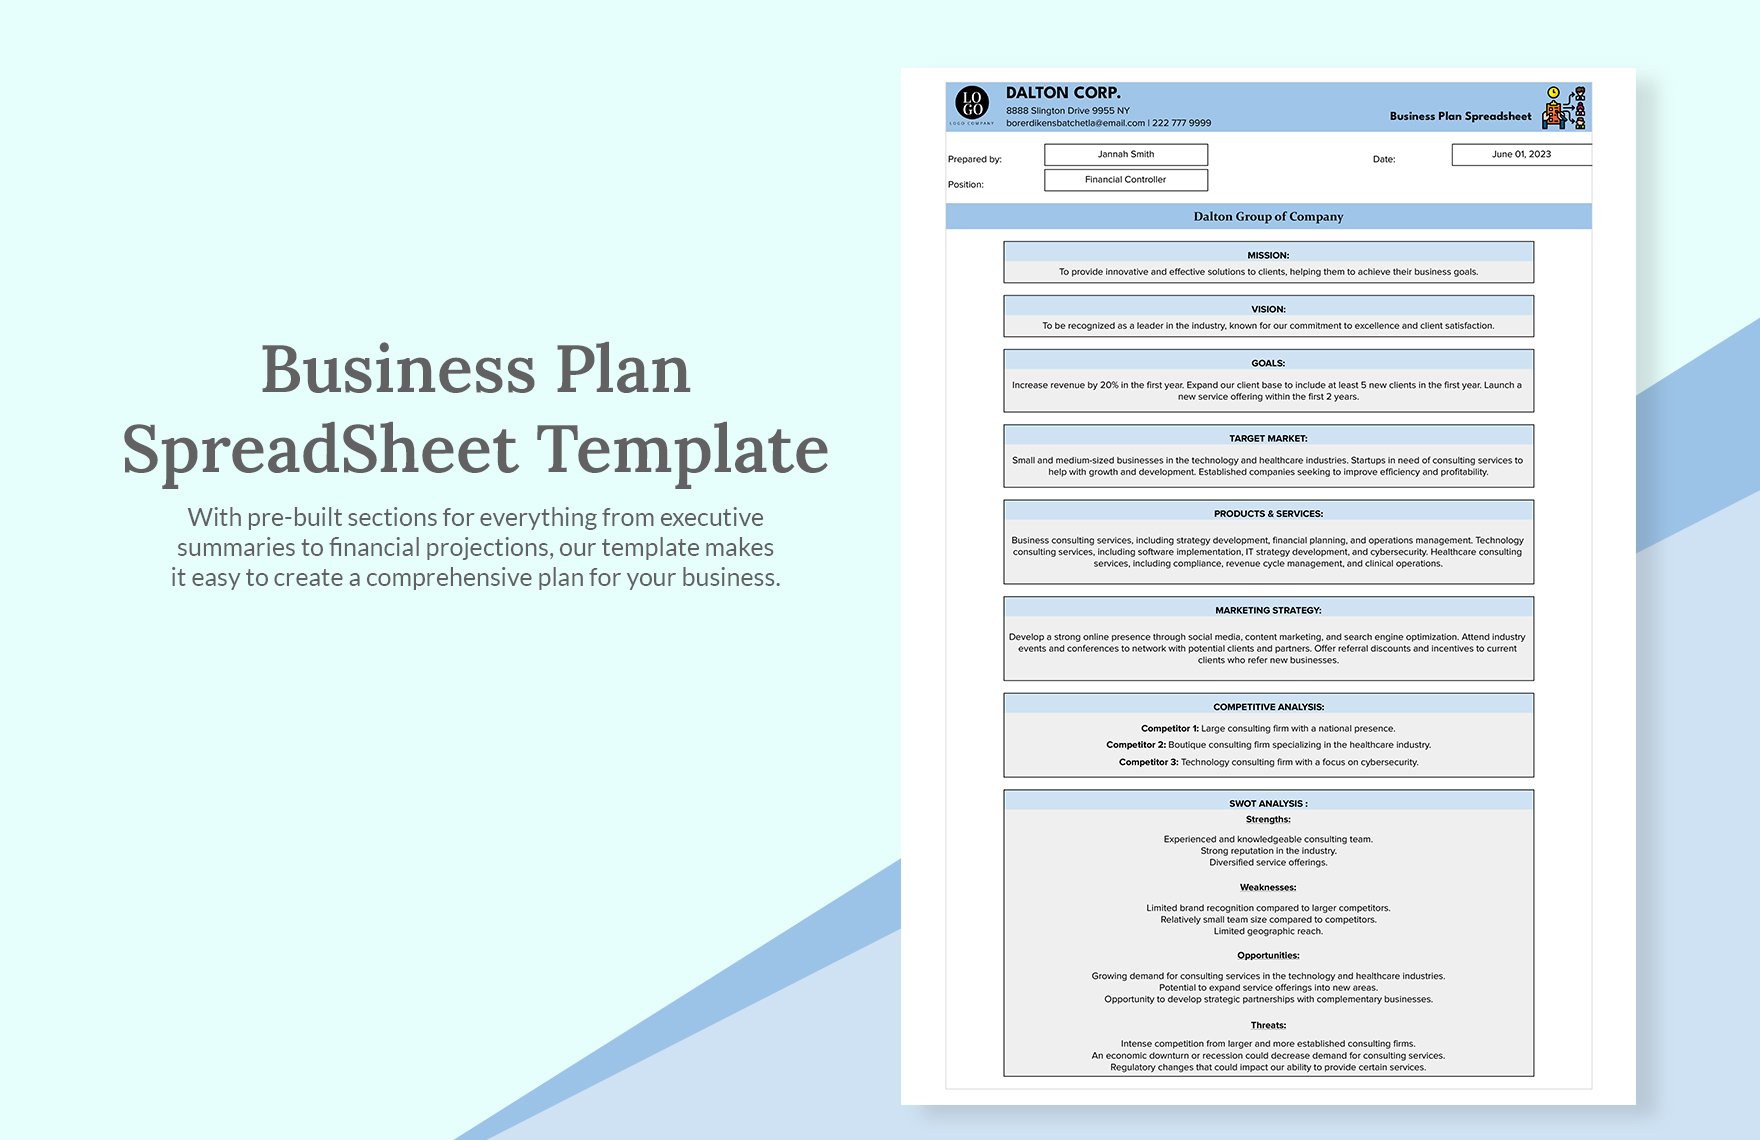 business plan excel spreadsheet template